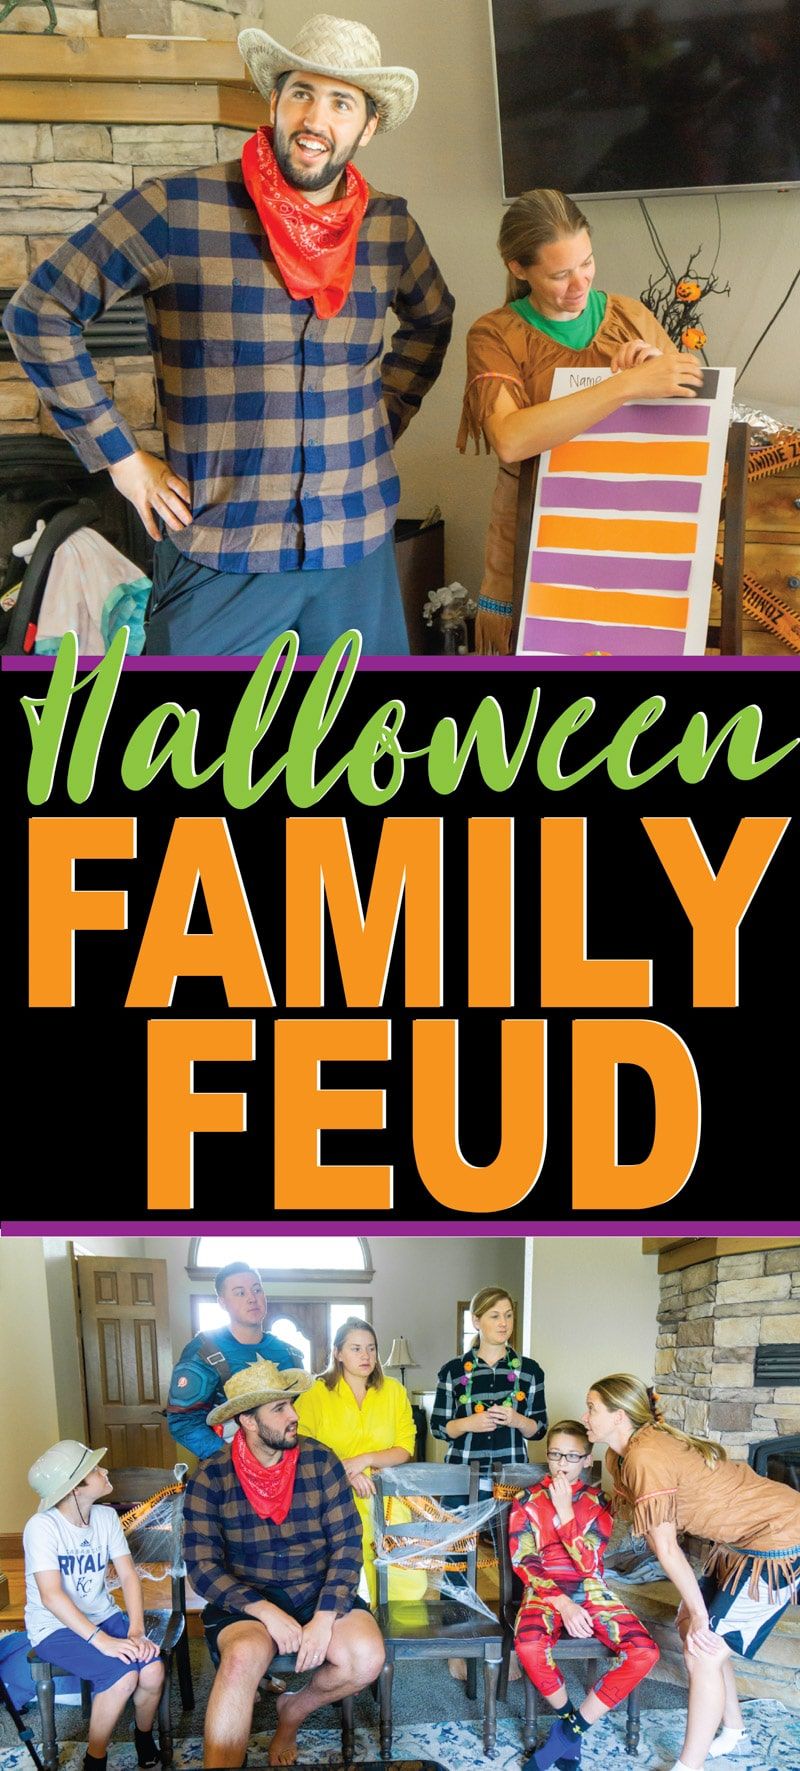 DIY Halloween οικογενειακή διαμάχη με αστείες ερωτήσεις για παιδιά και ενήλικες! Ιδανικό για ένα πάρτι αποκριών ή απλώς ένα παιχνίδι αποκριών για να παίξετε με την οικογένειά σας! Ένα από τα πιο διασκεδαστικά παιχνίδια αποκριών εκεί έξω!